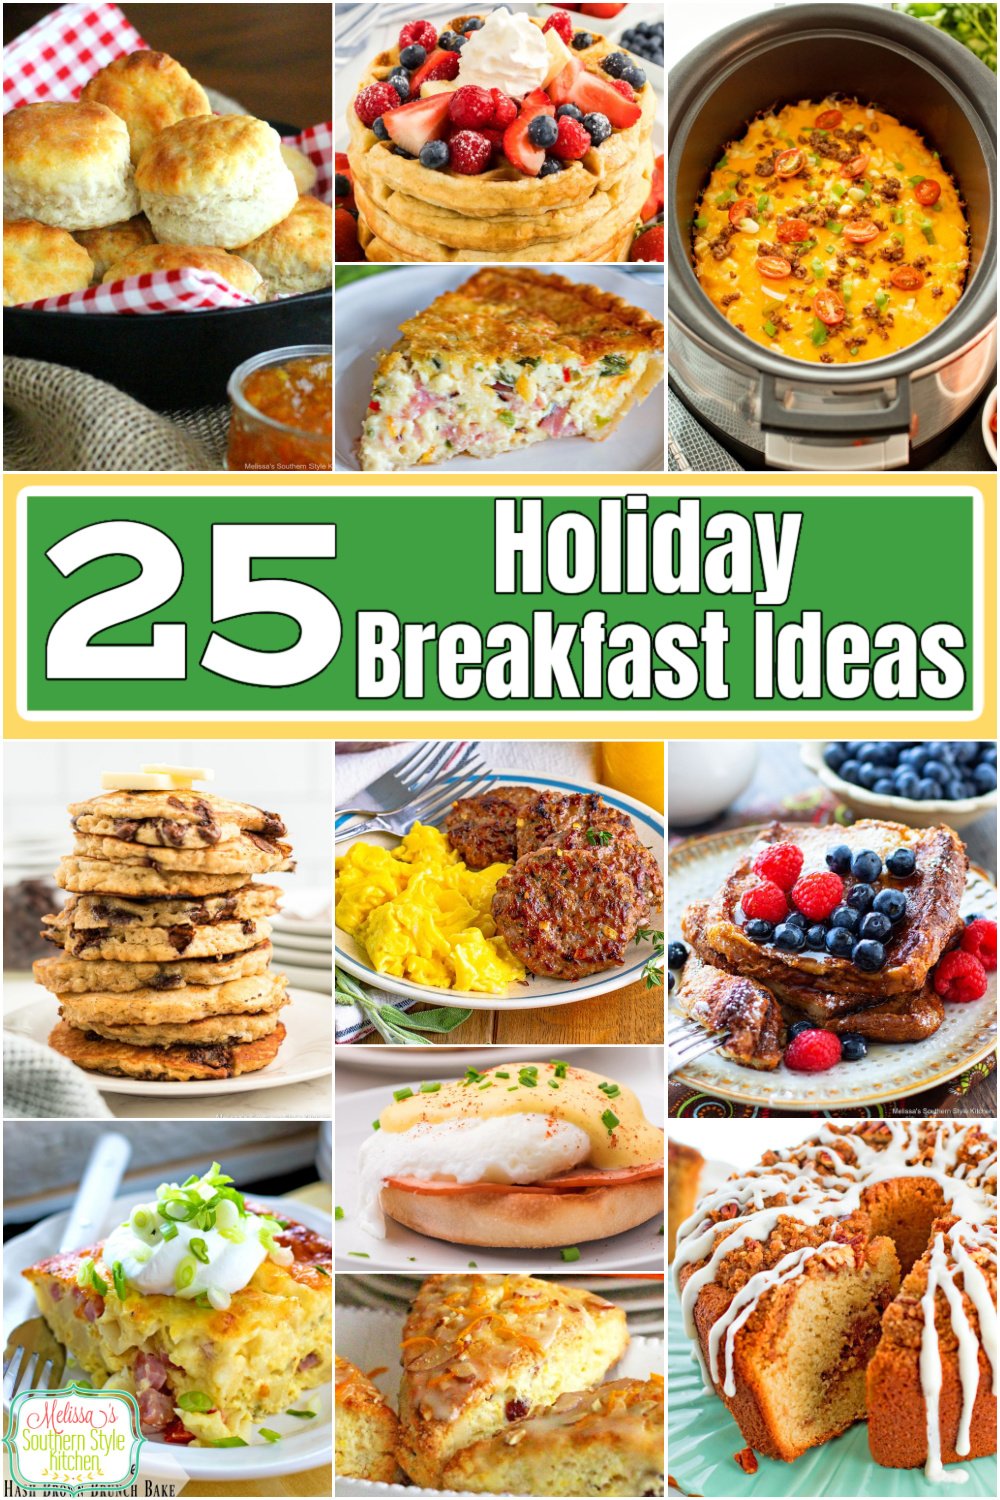 Start your celebration with 25 Holiday Breakfast Ideas certain to impress! #christmasbrunch #easterrecipes #holidaybreakfast #brunchrecipes #christmas #thanksgiving #brunchrecipes via @melissasssk